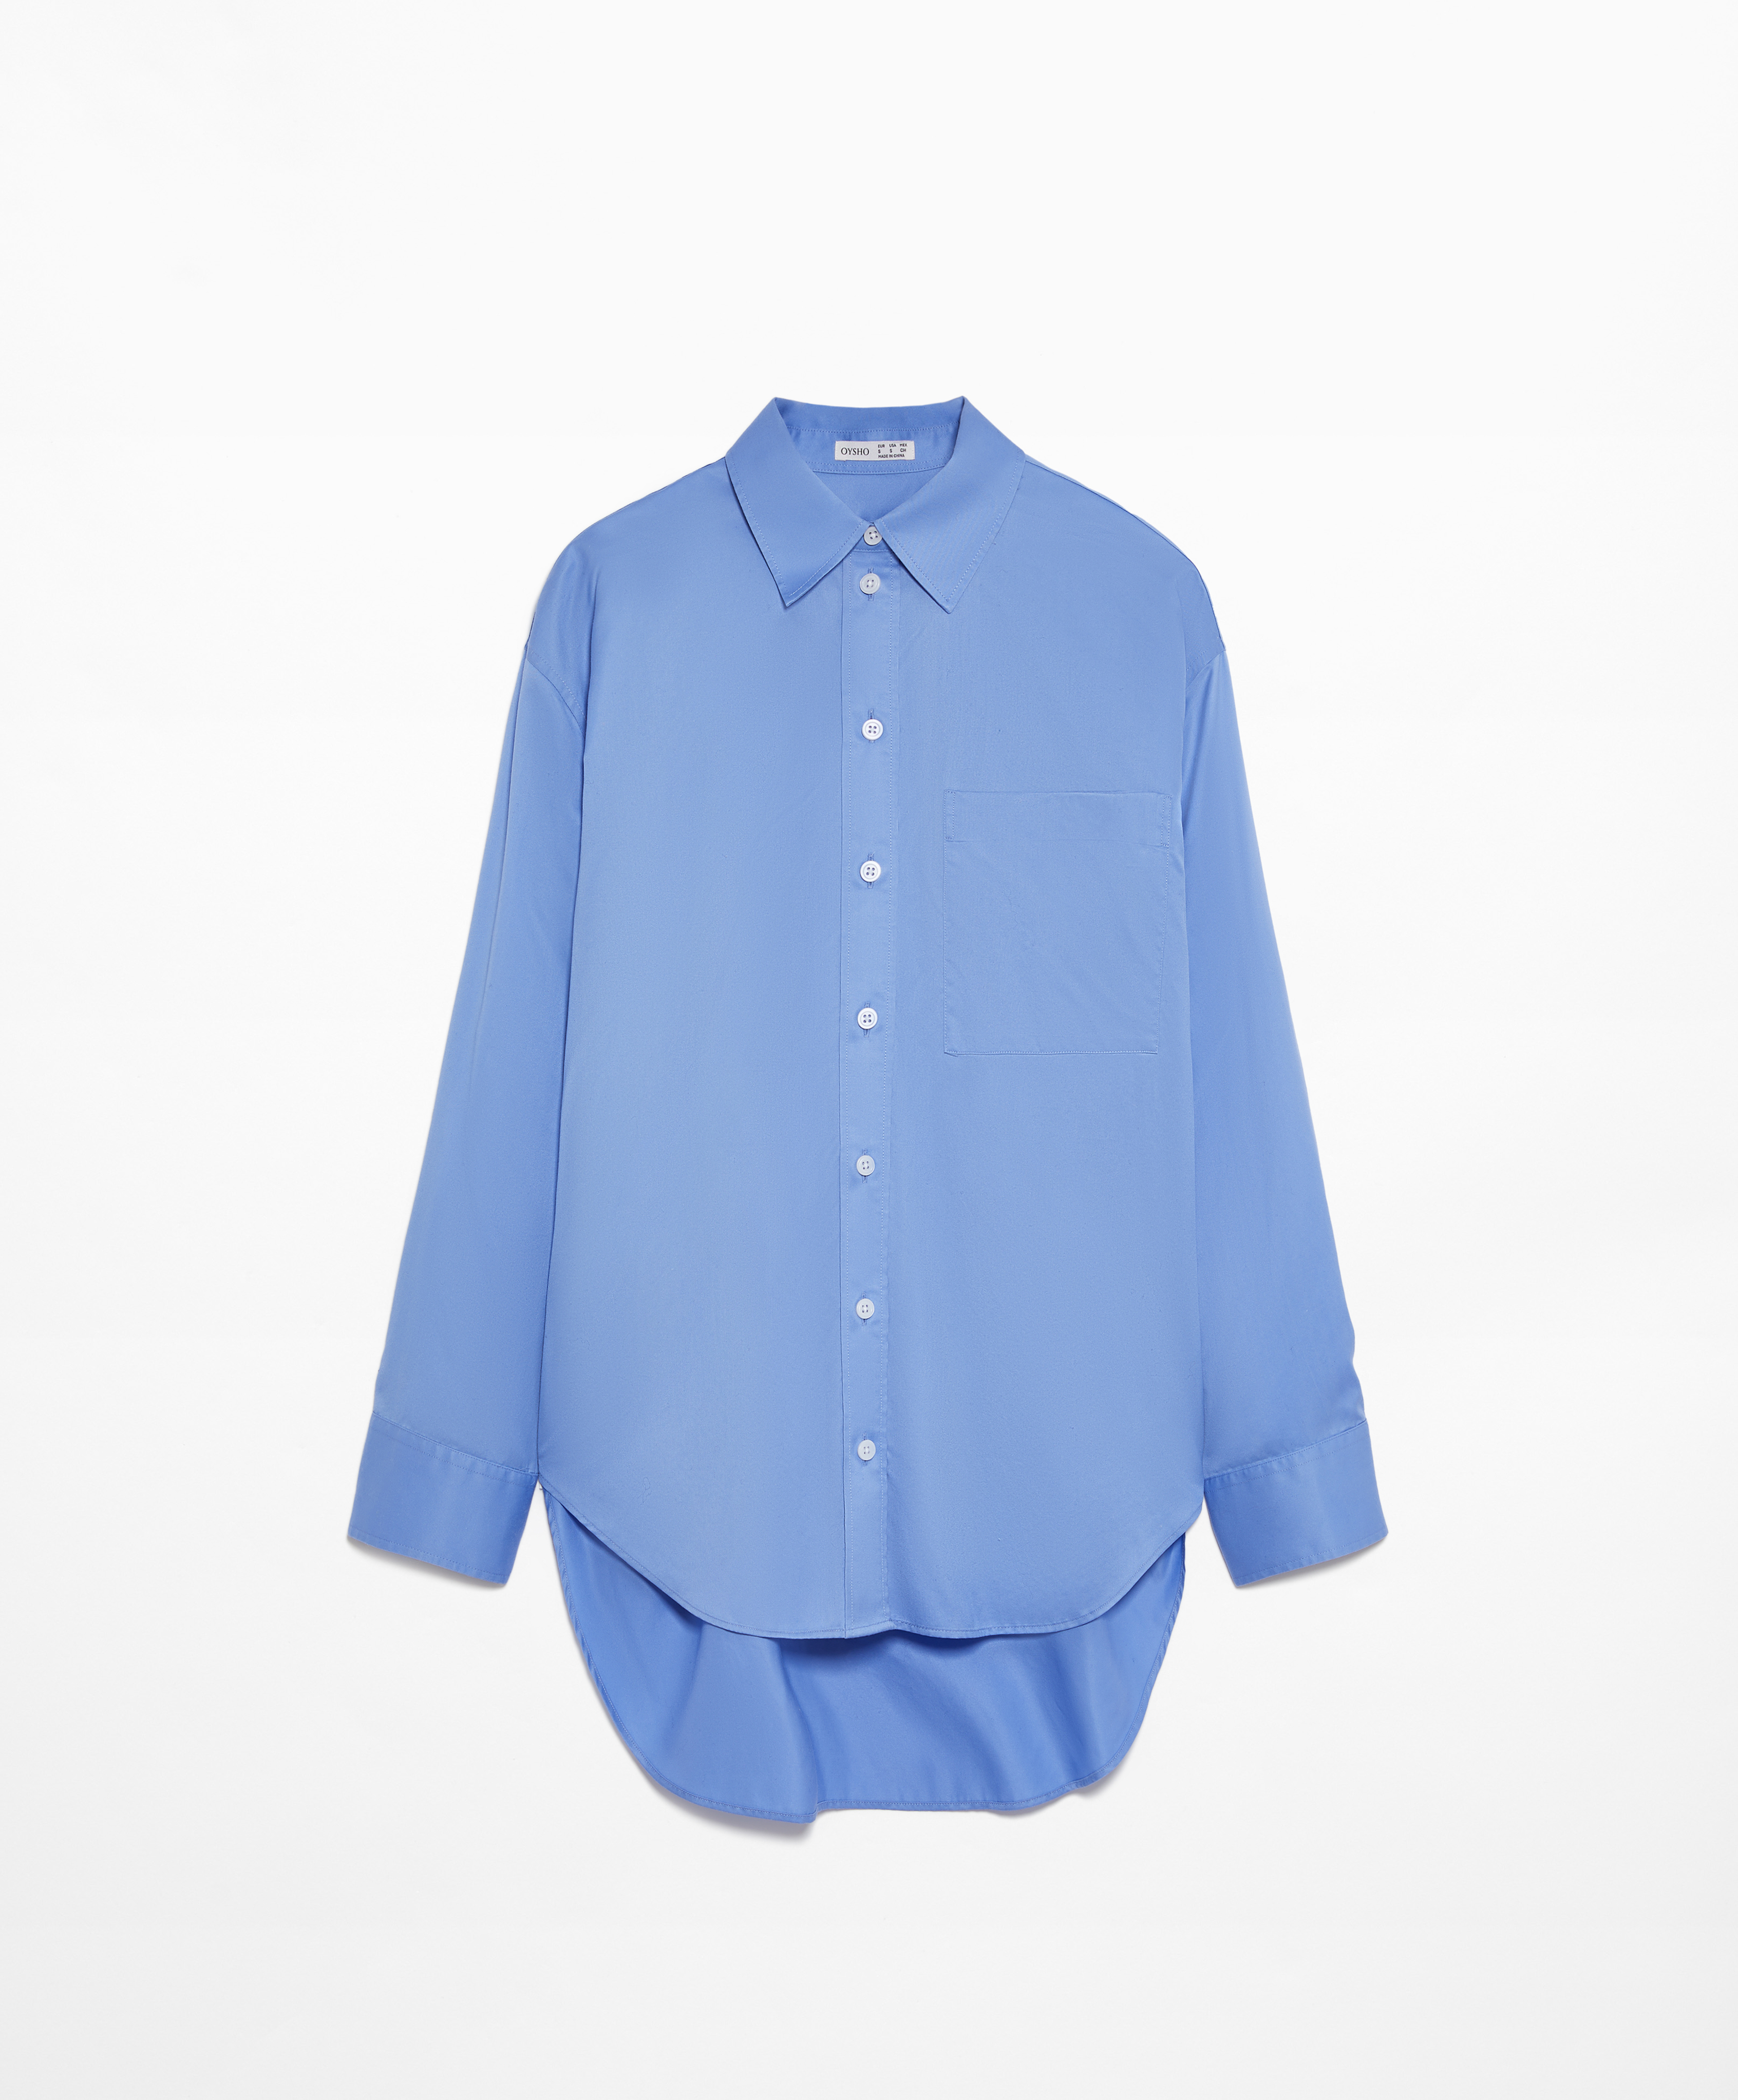 Oversize easy-iron 100% cotton shirt with pocket